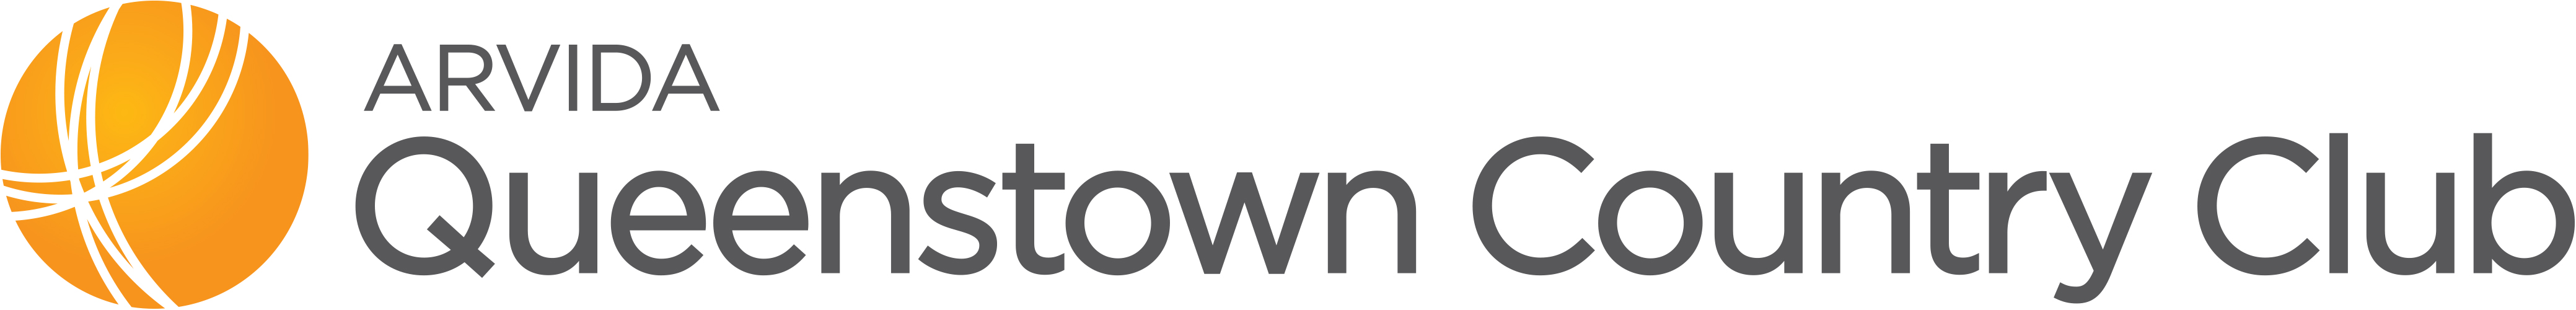 Queenstown Country Club | Arvida logo